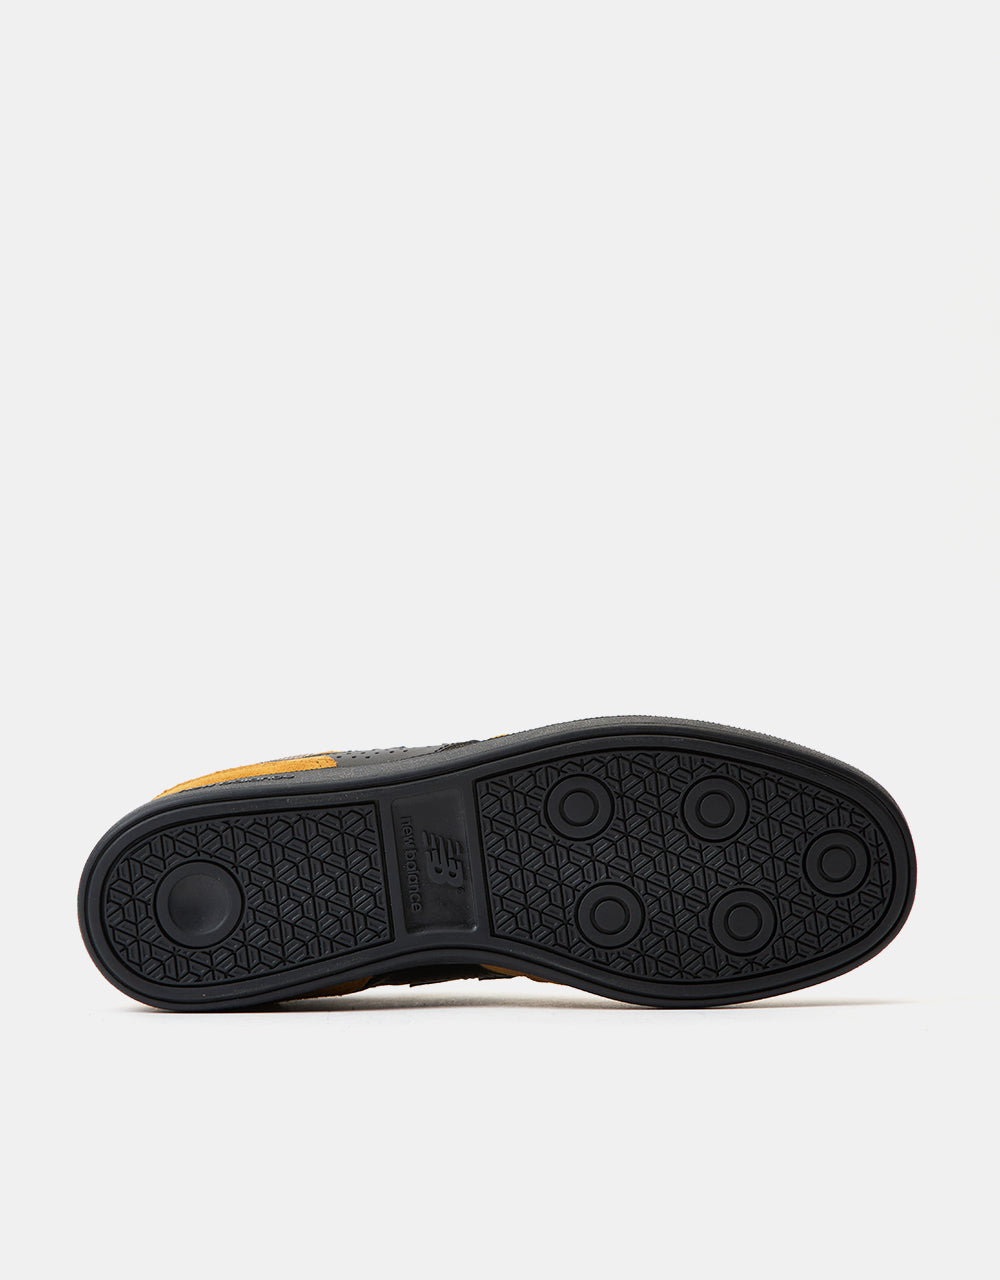 New Balance Numeric Brandon Westgate 508 Skate Shoes - Caramel/Black